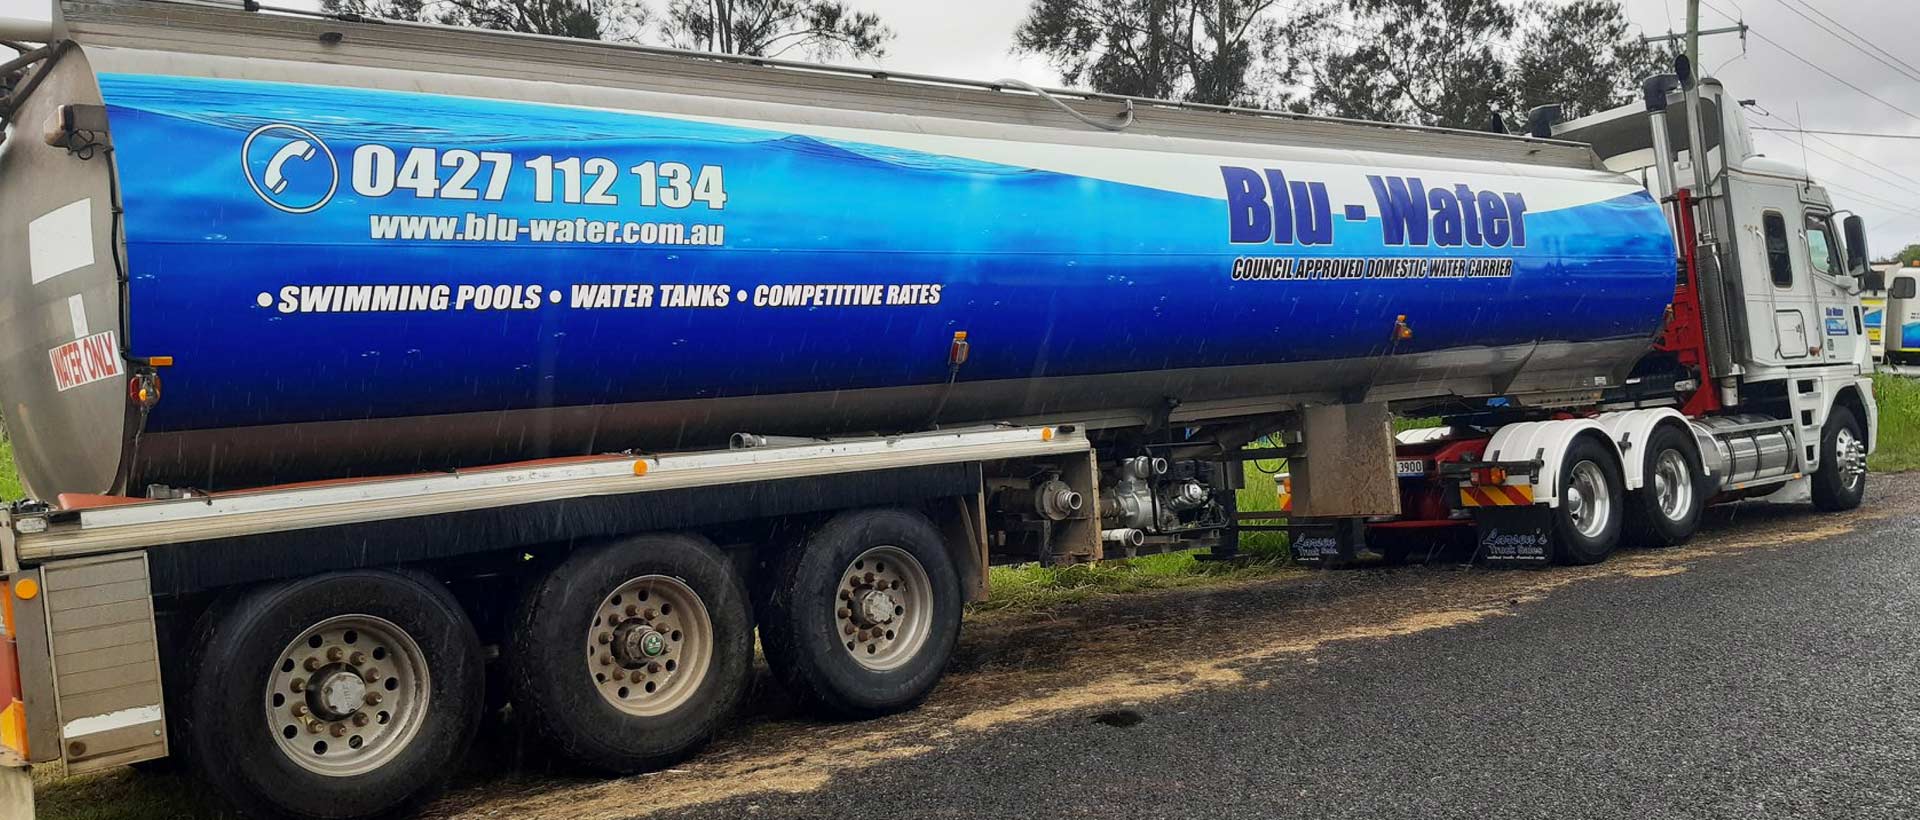 Blu-Water truck